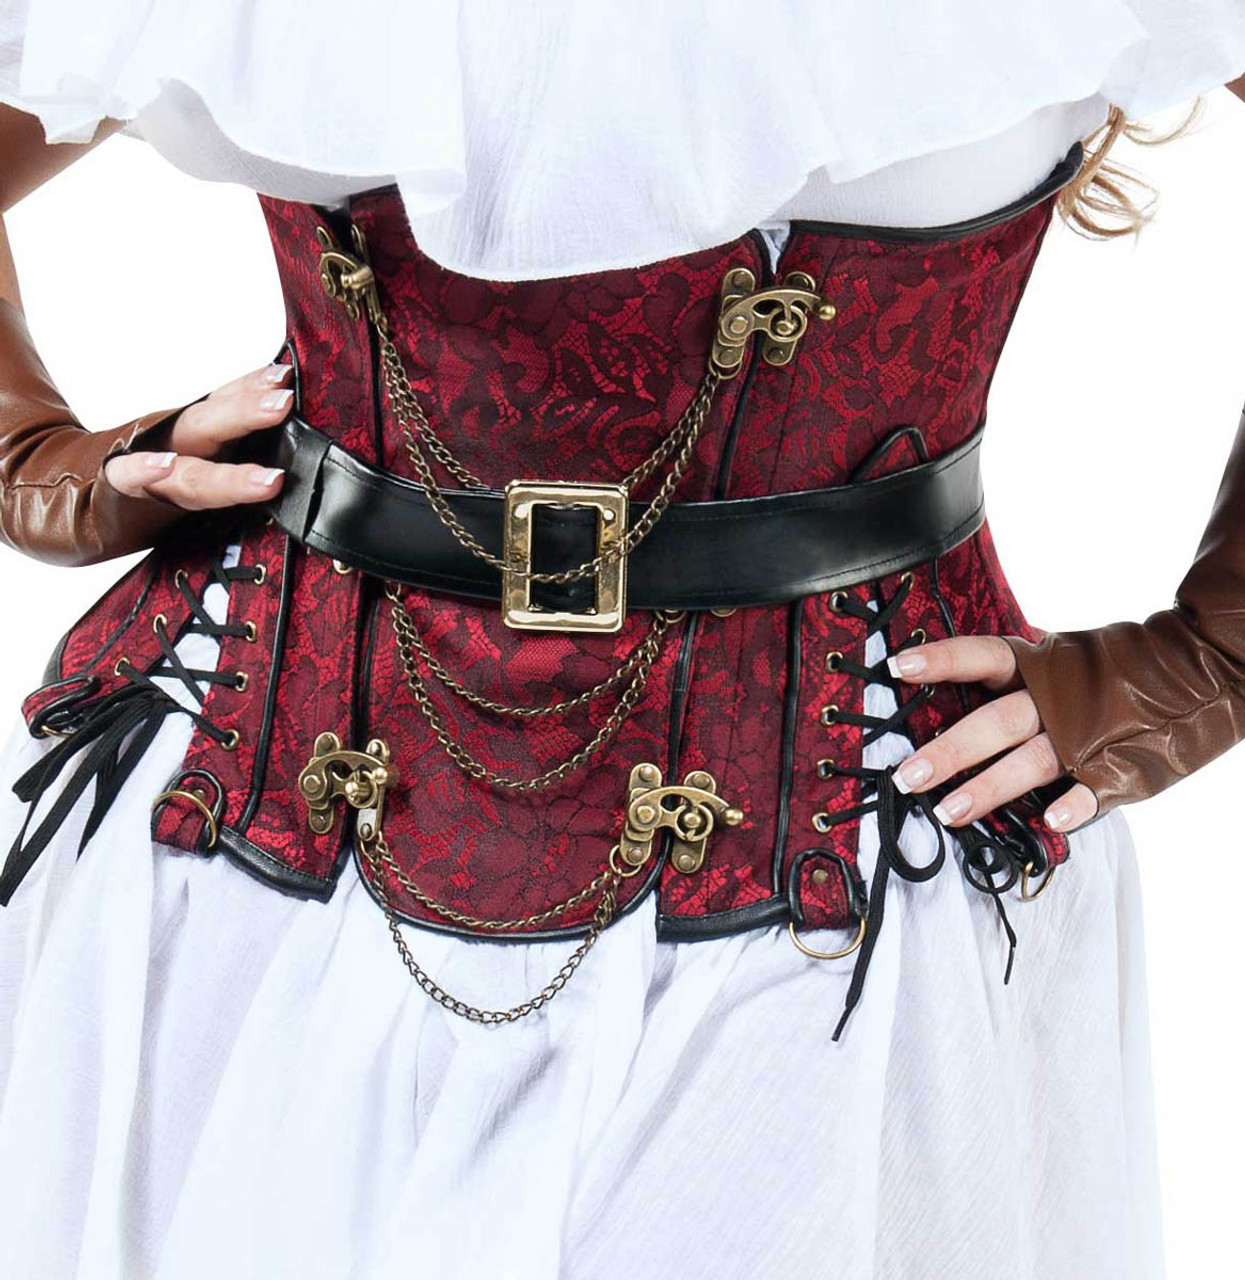 JenPen 5 Pcs Women Pirate Costume Renaissance Tops Corset Belt Pirate Hat Necklace Eye Patch for Medieval Halloween Cosplay